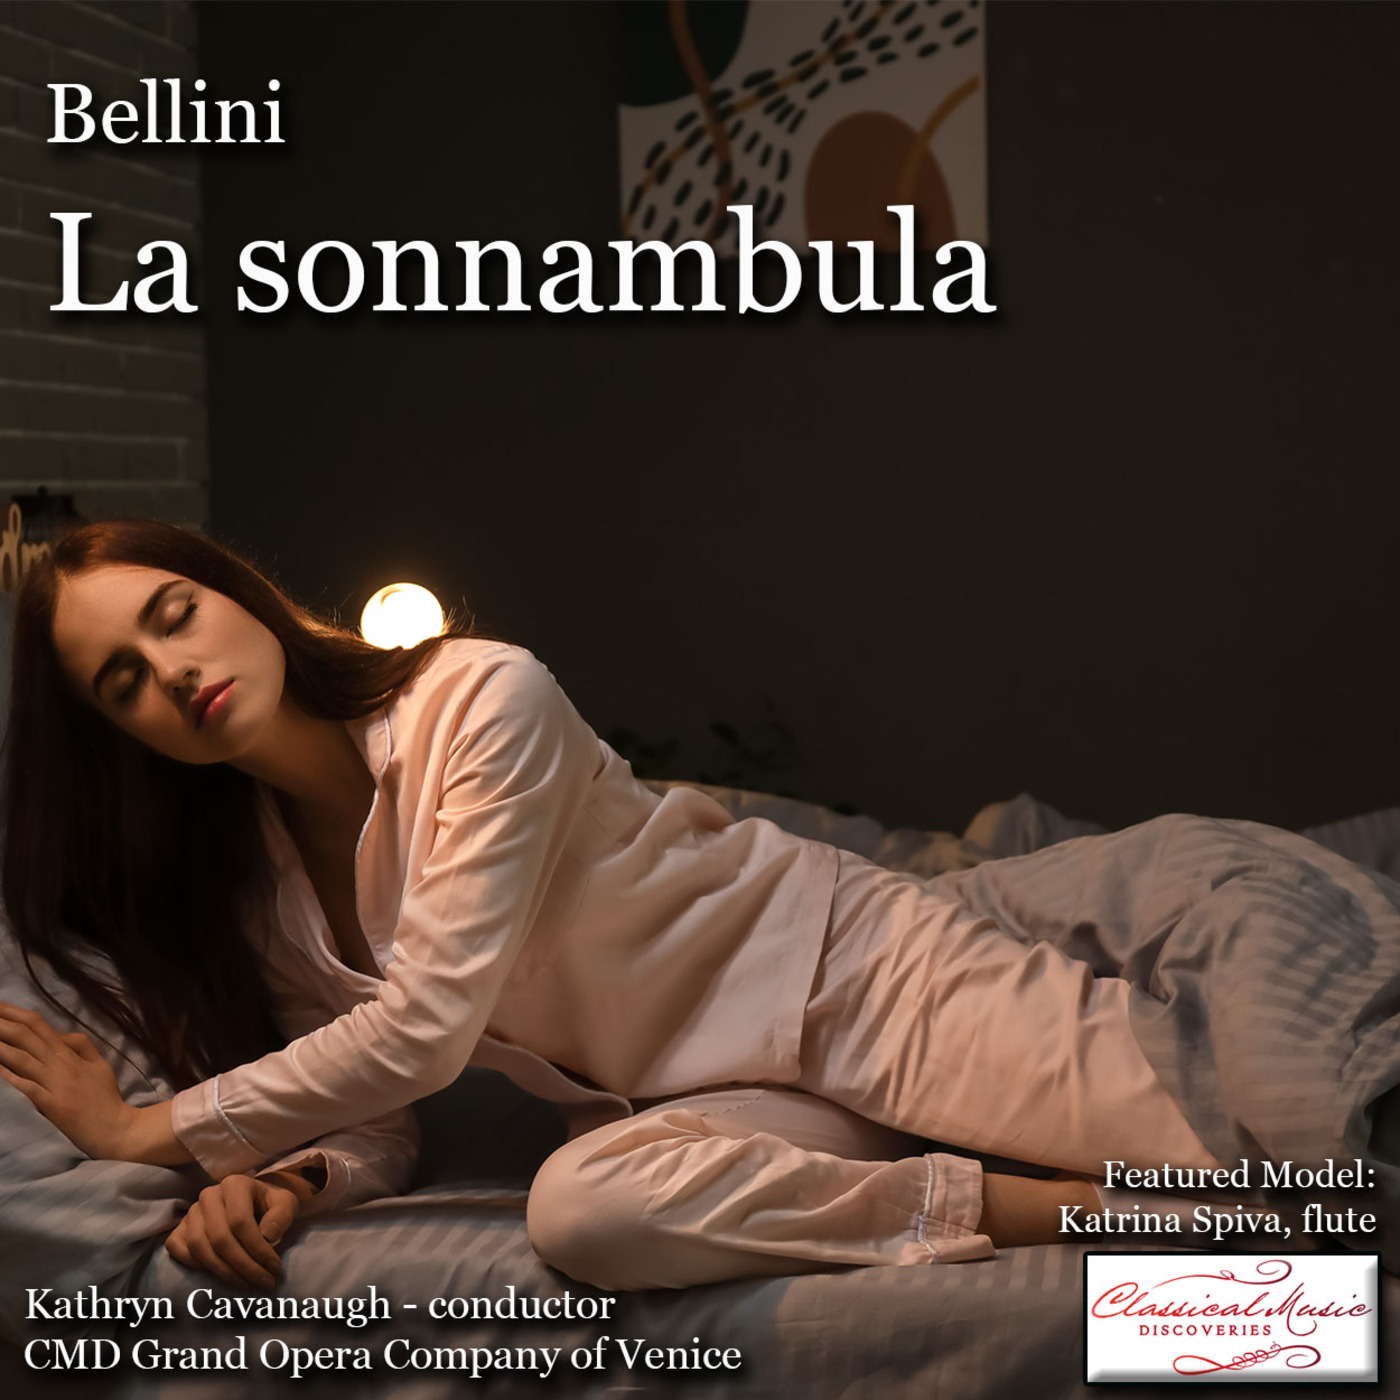 Episode 126: 17126 Bellini: La sonnambula